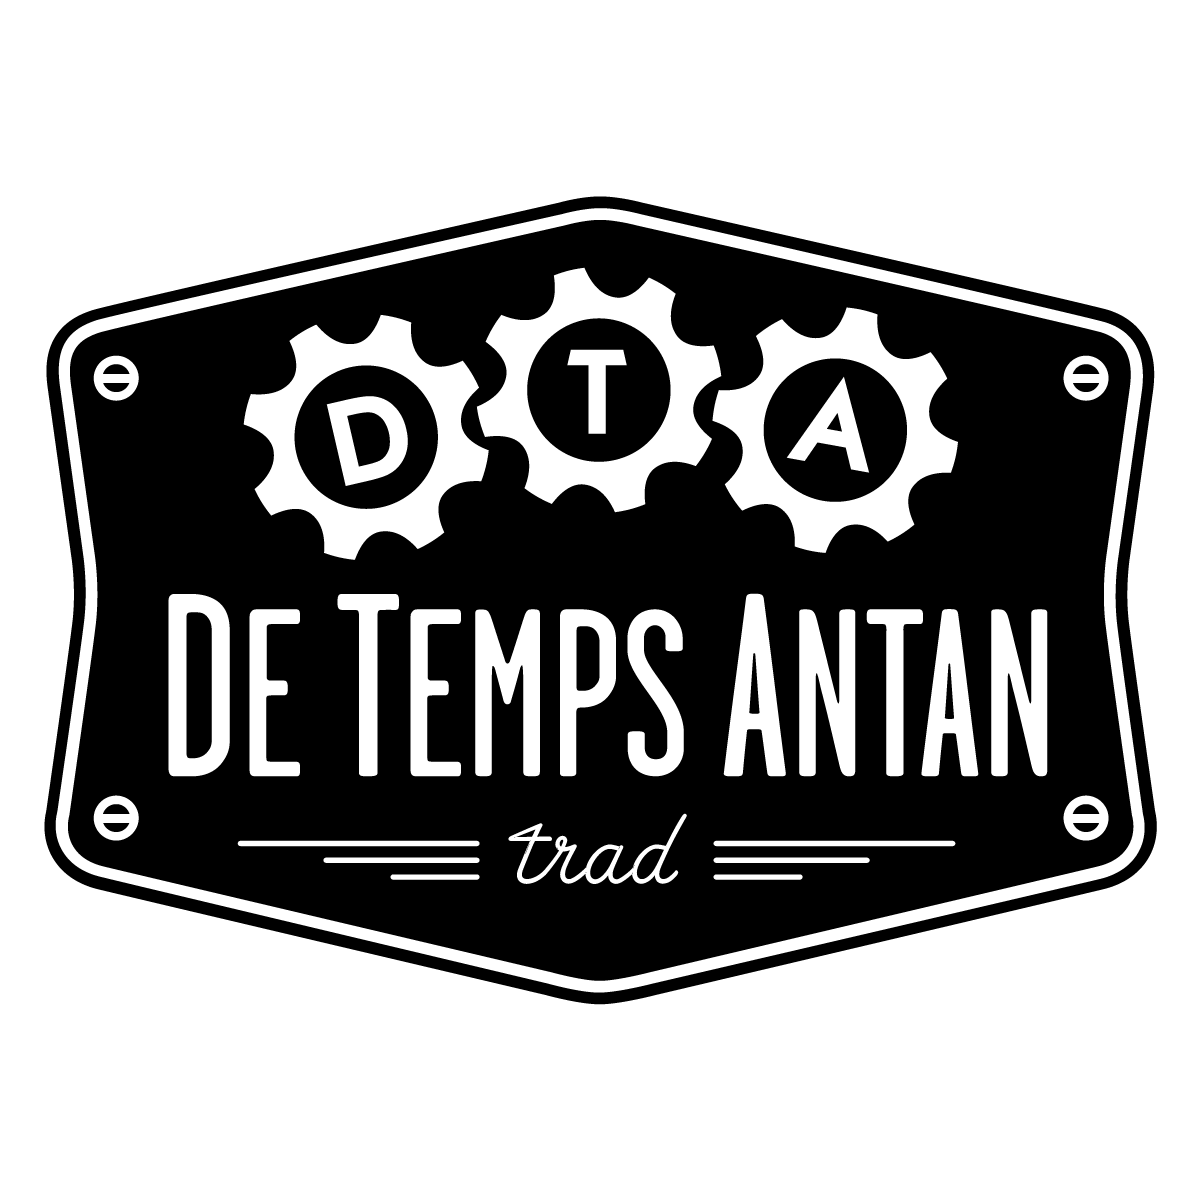 dta_logo_DeTempsAntan